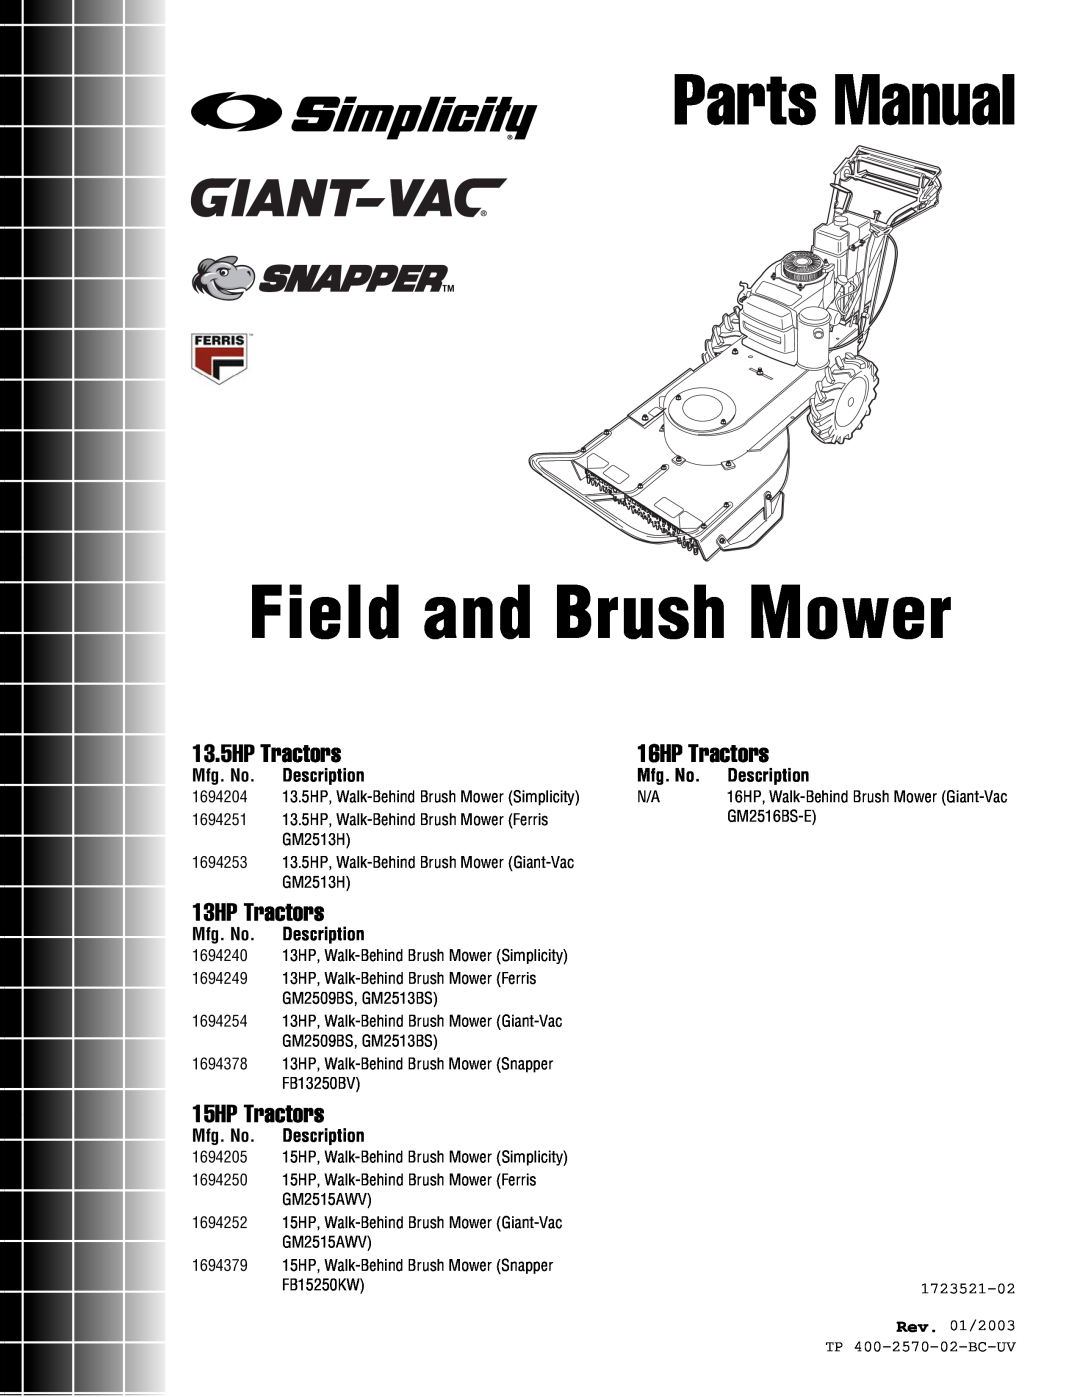 Simplicity 15HP, 16HP manual Mfg. No. Description, Parts Manual, Field and Brush Mower, 13.5HP Tractors, 13HP Tractors 